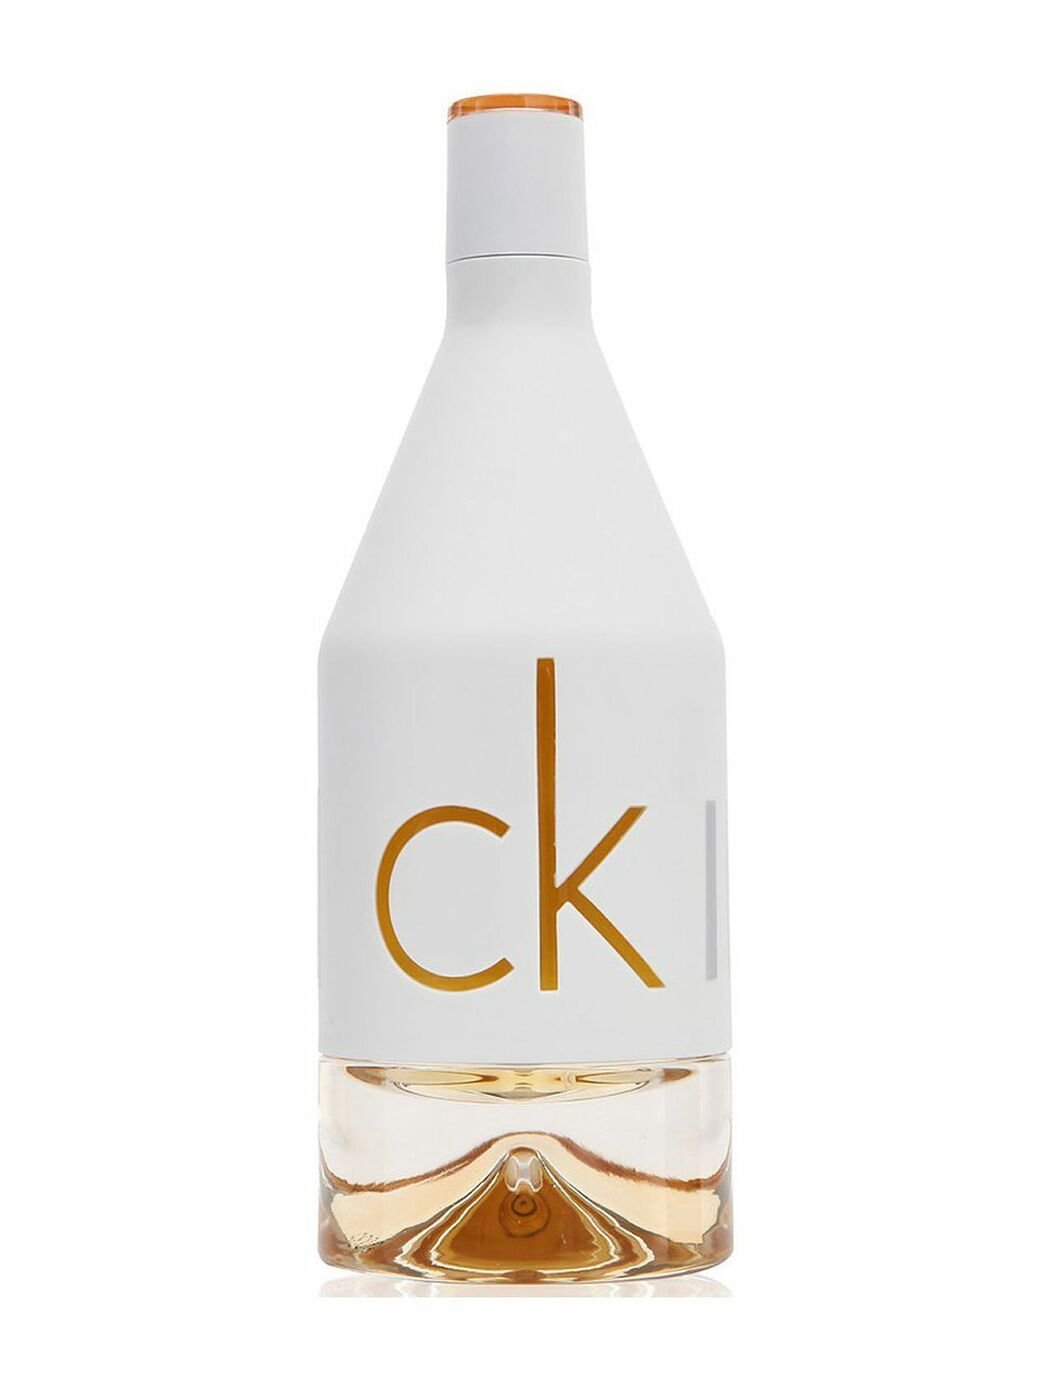 ckin2u 50 ml